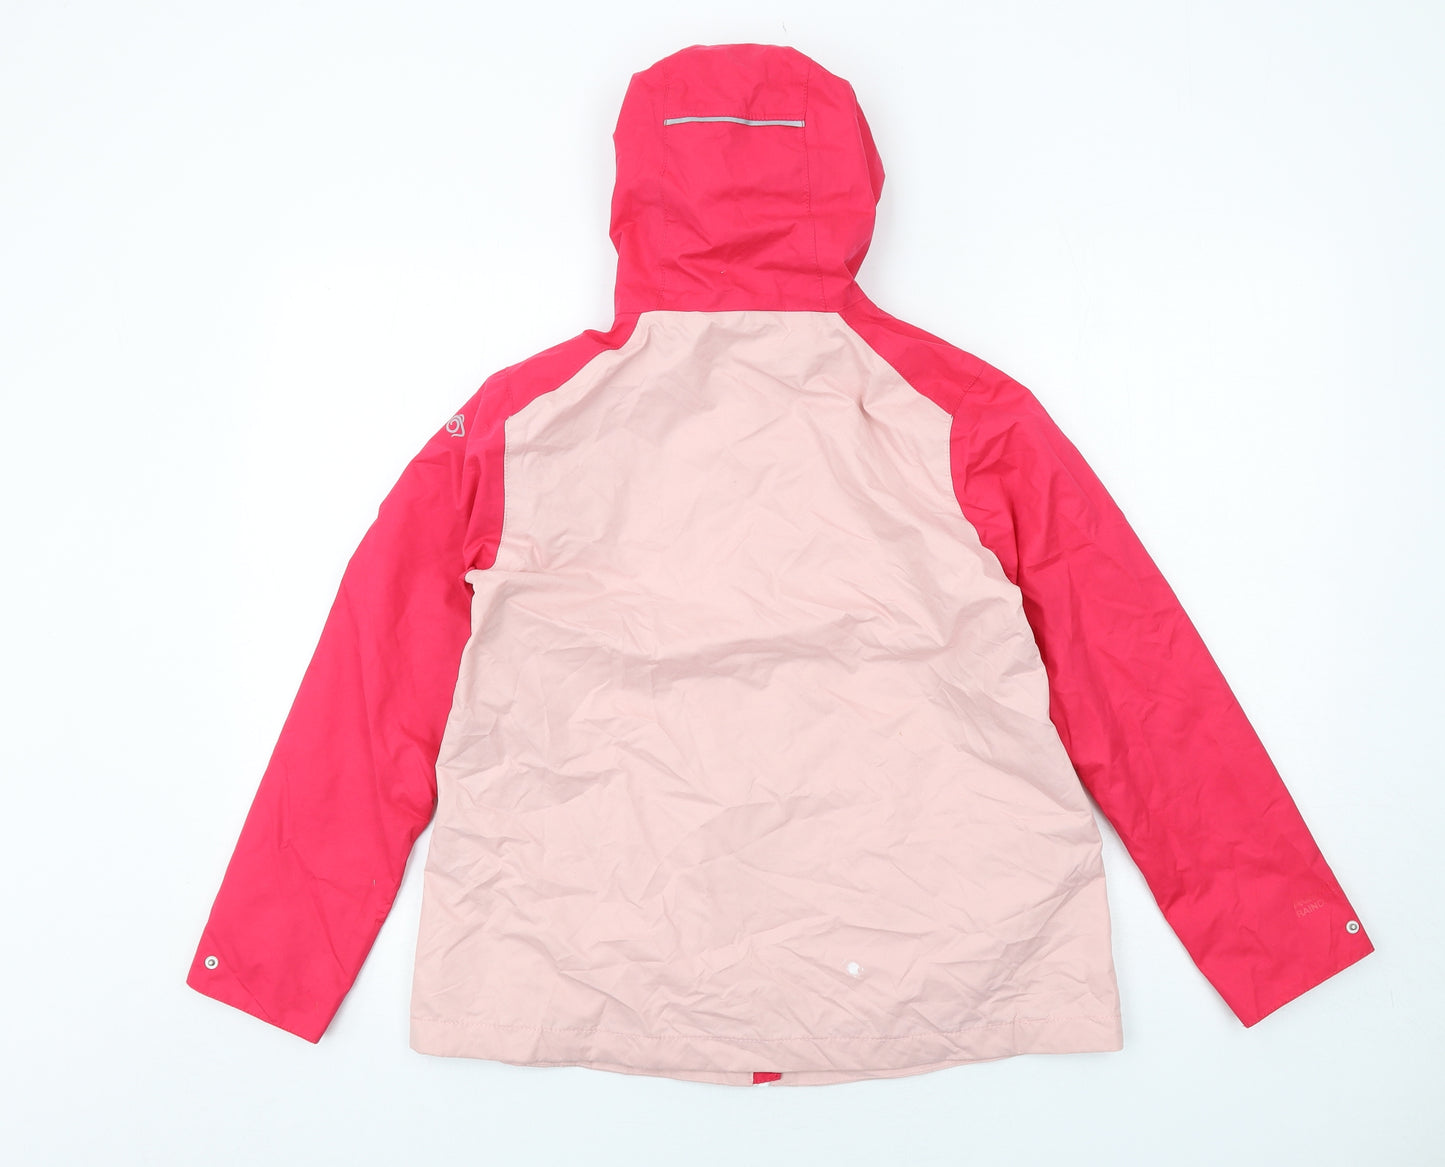 Craghoppers Girls Pink Windbreaker Jacket Size 11-12 Years Zip